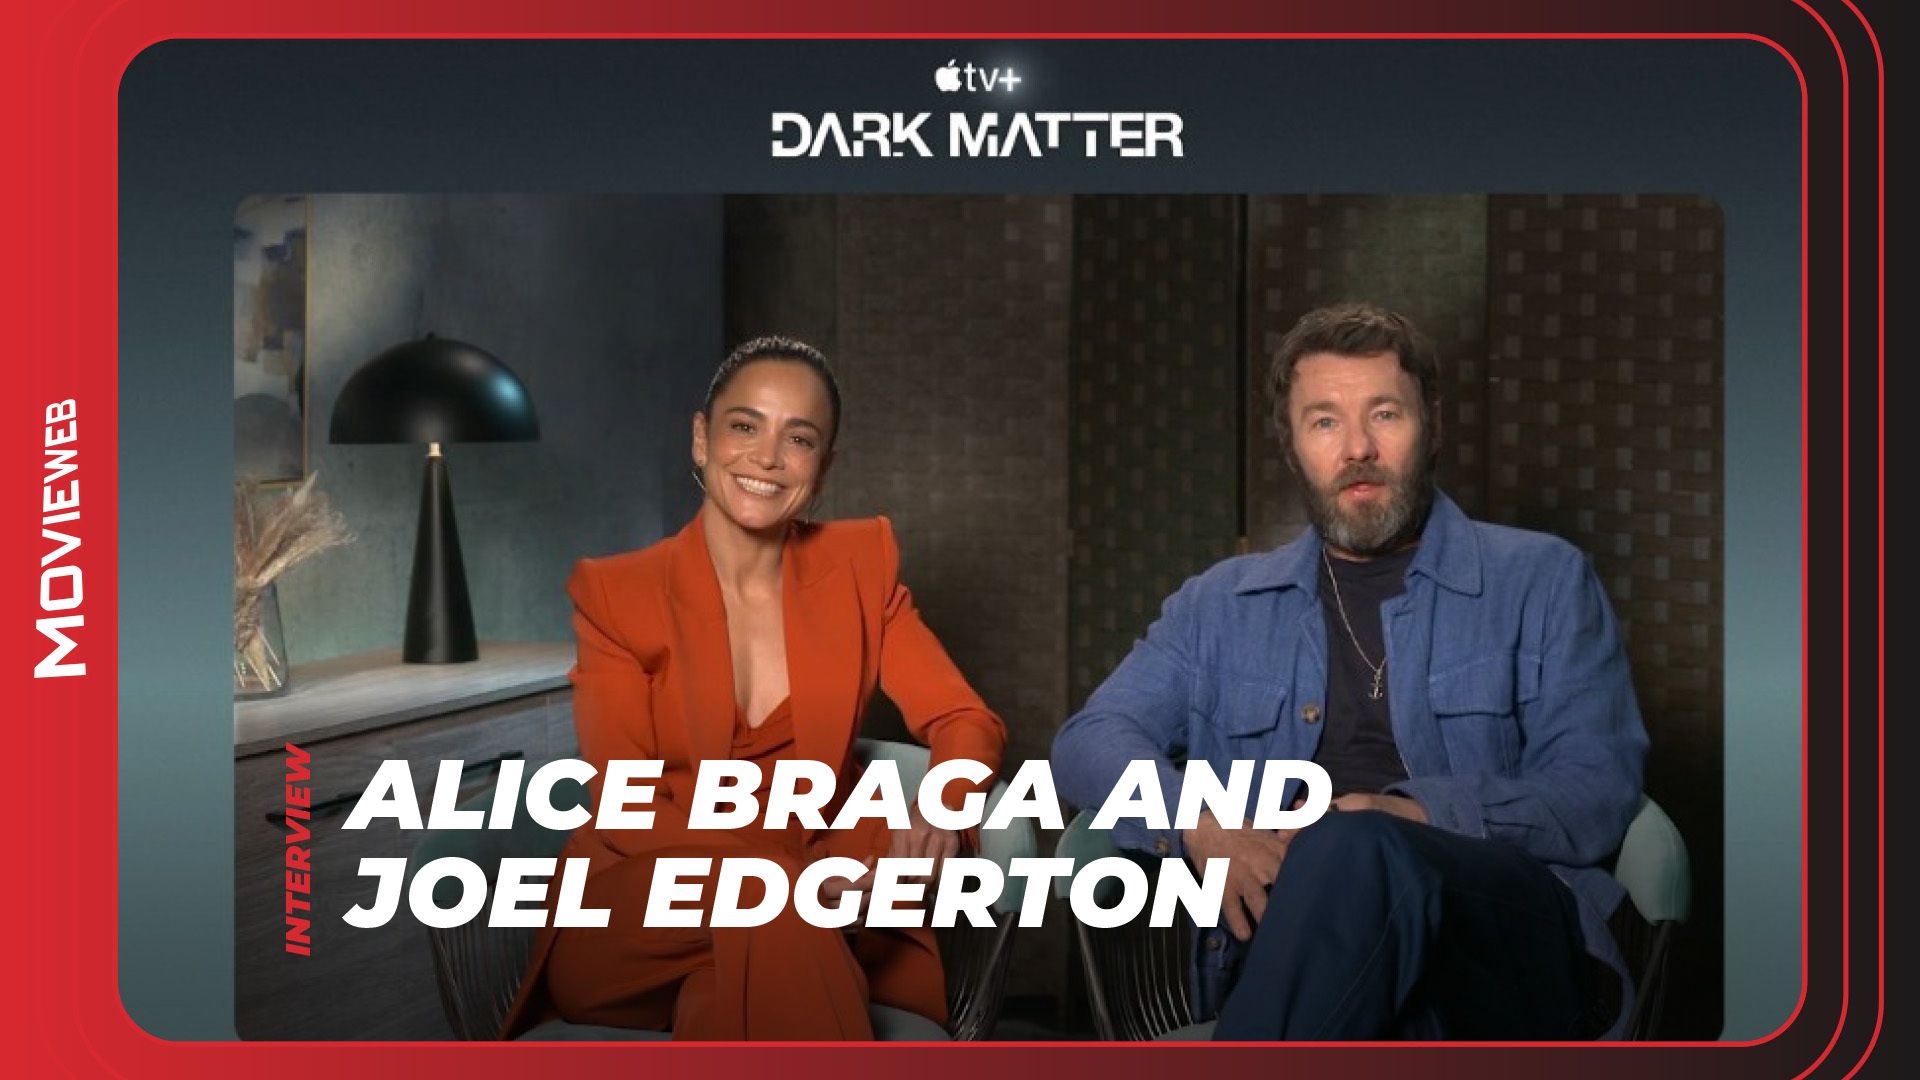 Dark Matter - Alice Braga and Joel Edgerton